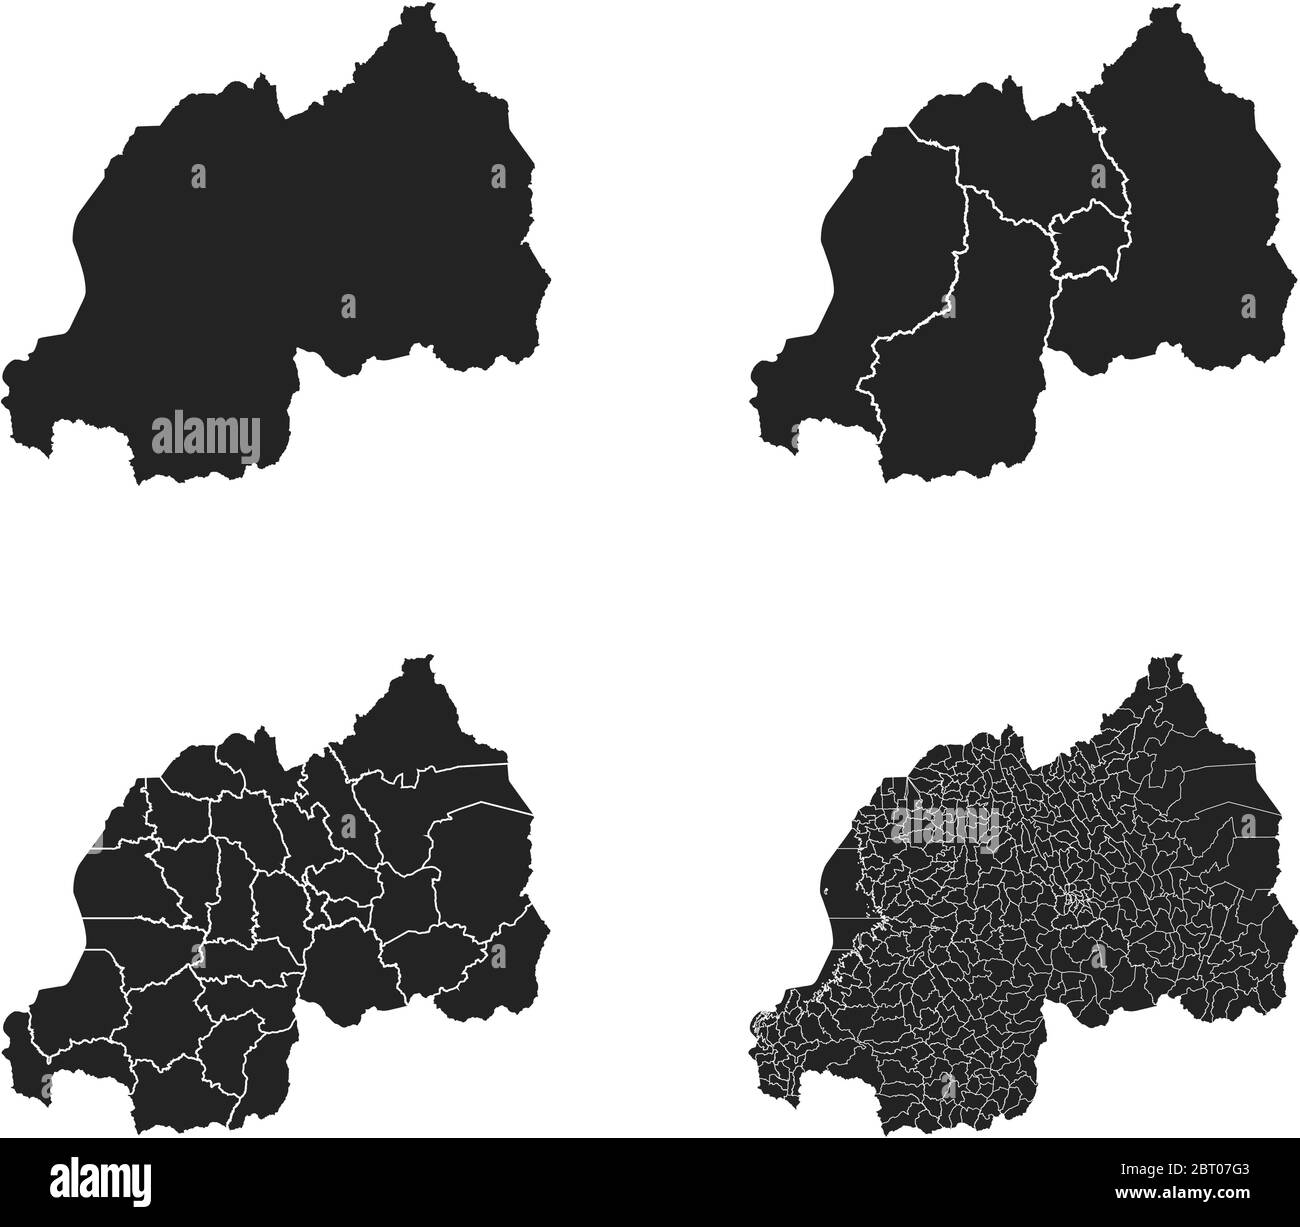 Rwanda vector maps with administrative regions, municipalities, departments, borders Stock Vector